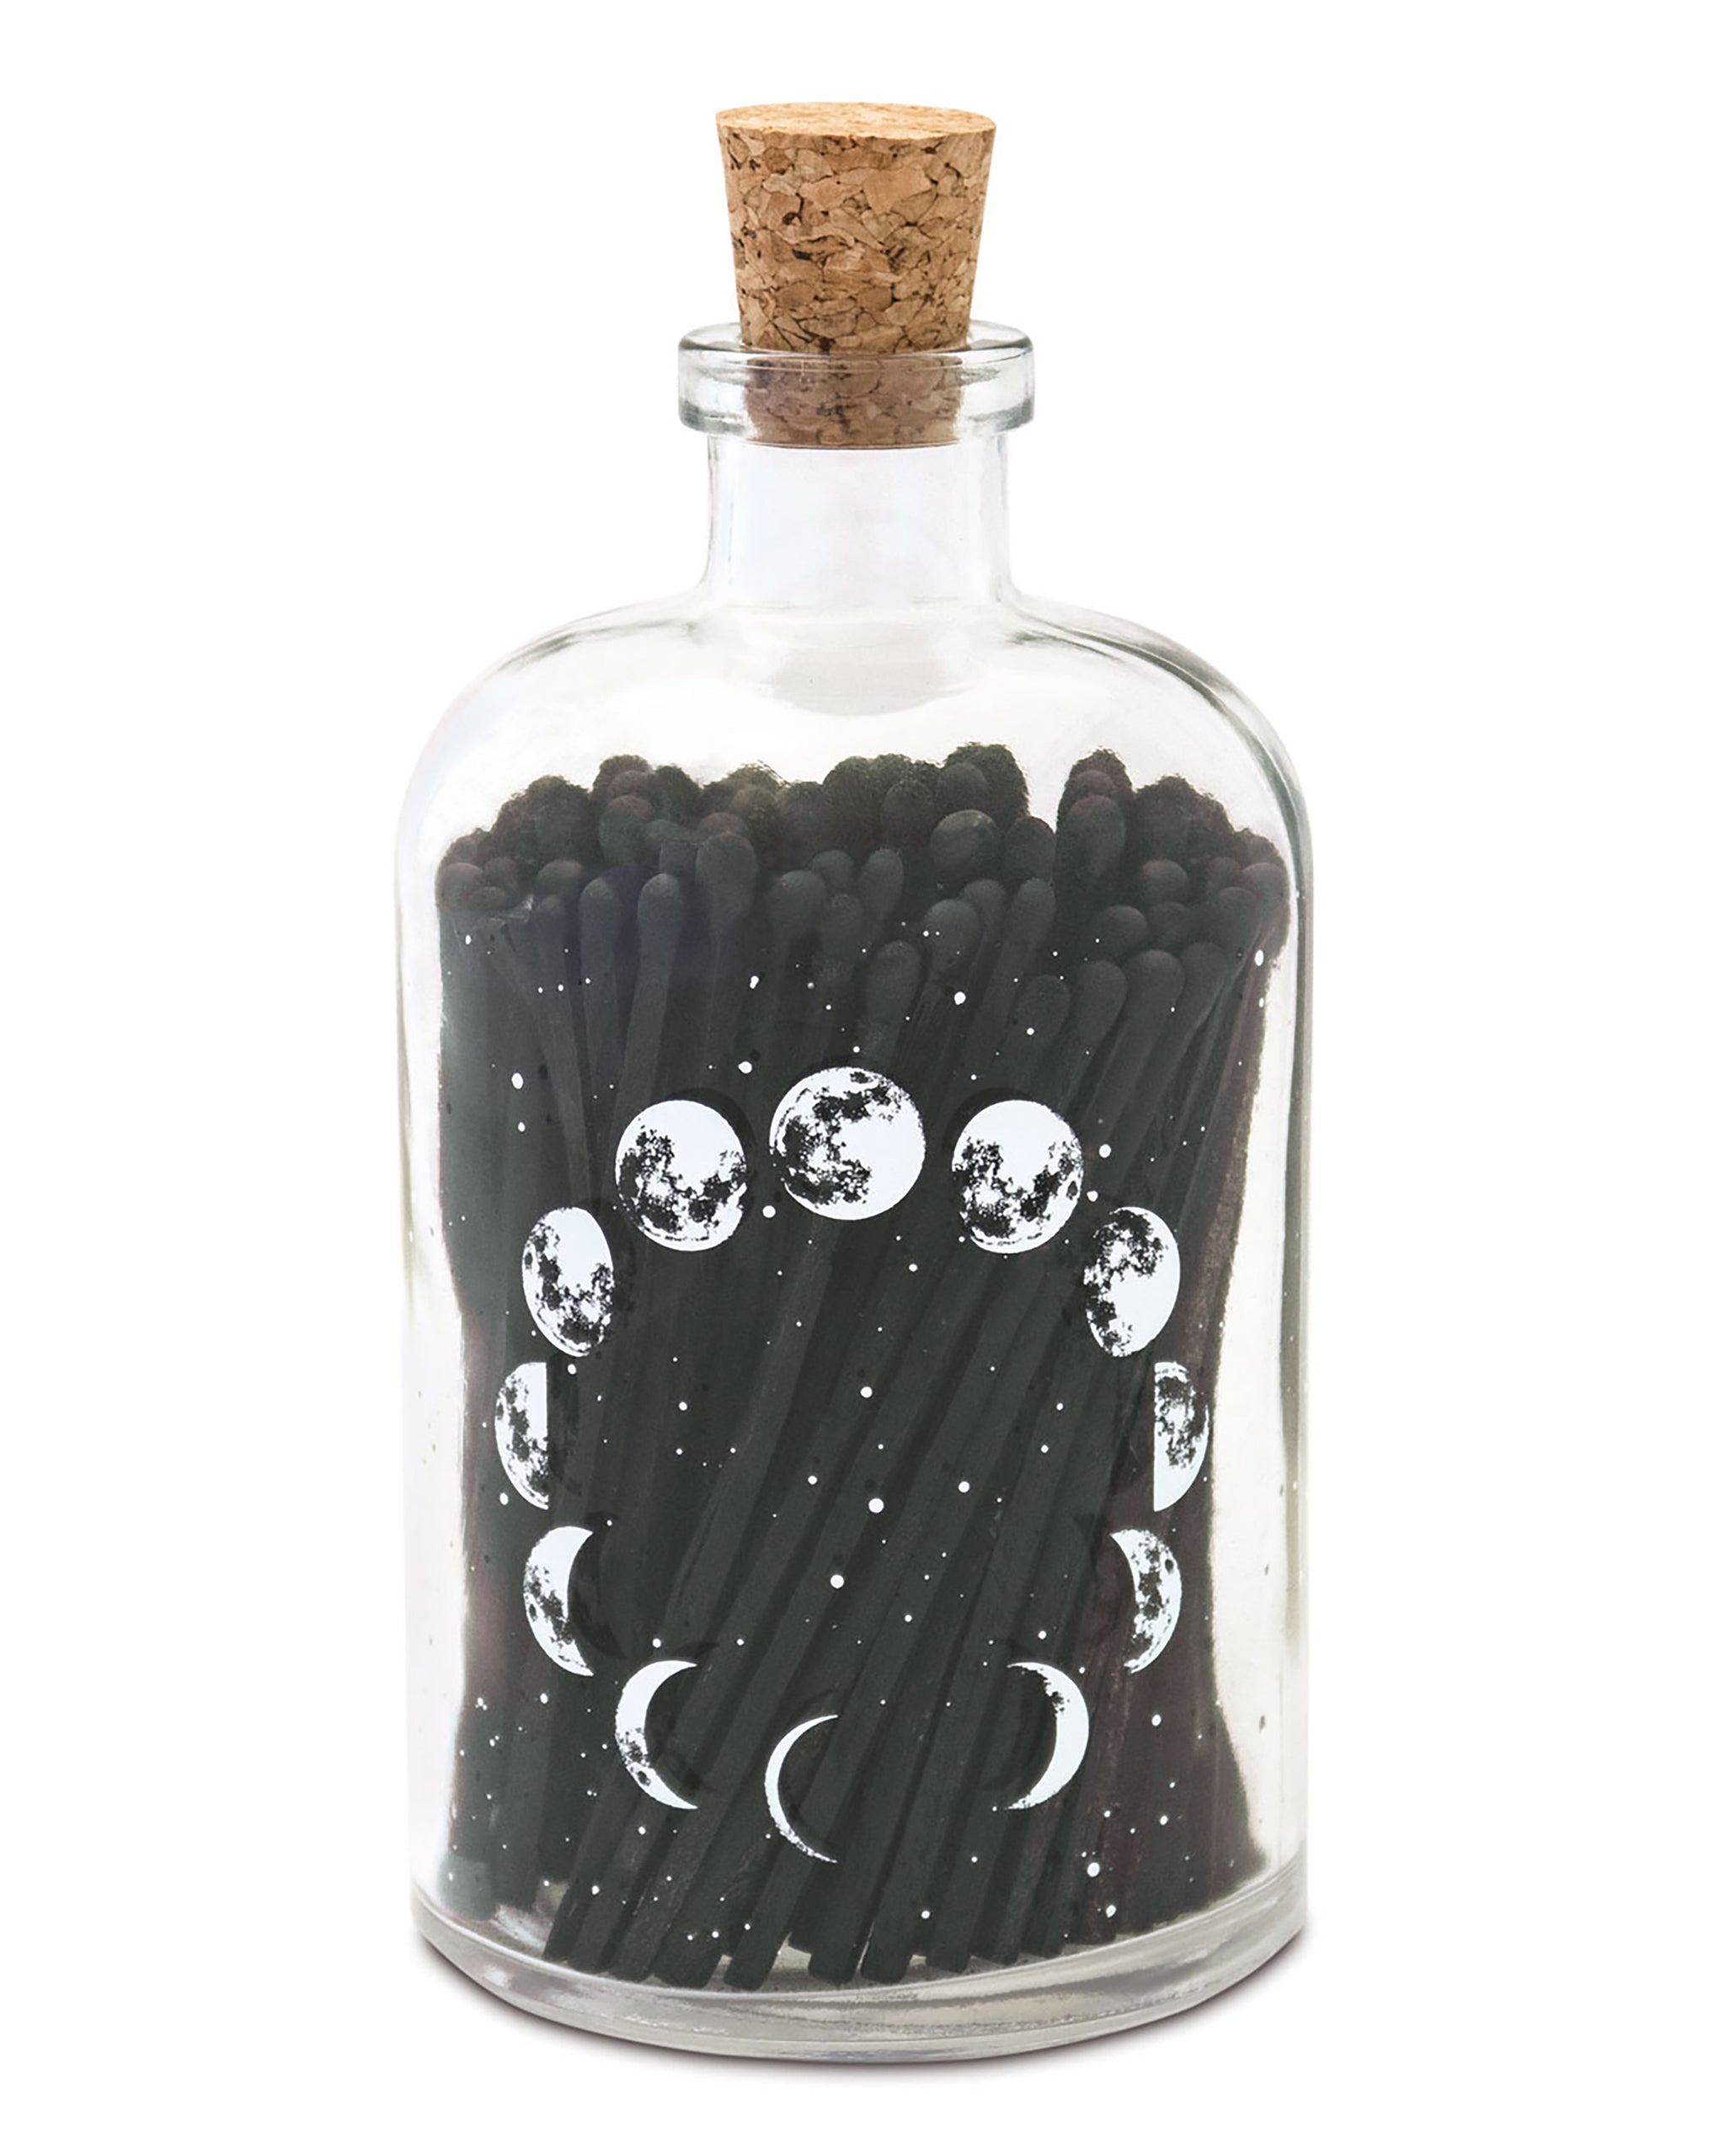 Large Moon Phase Match Stick Bottle & Striker, by Skeem Design, Turquoise + Tobacco